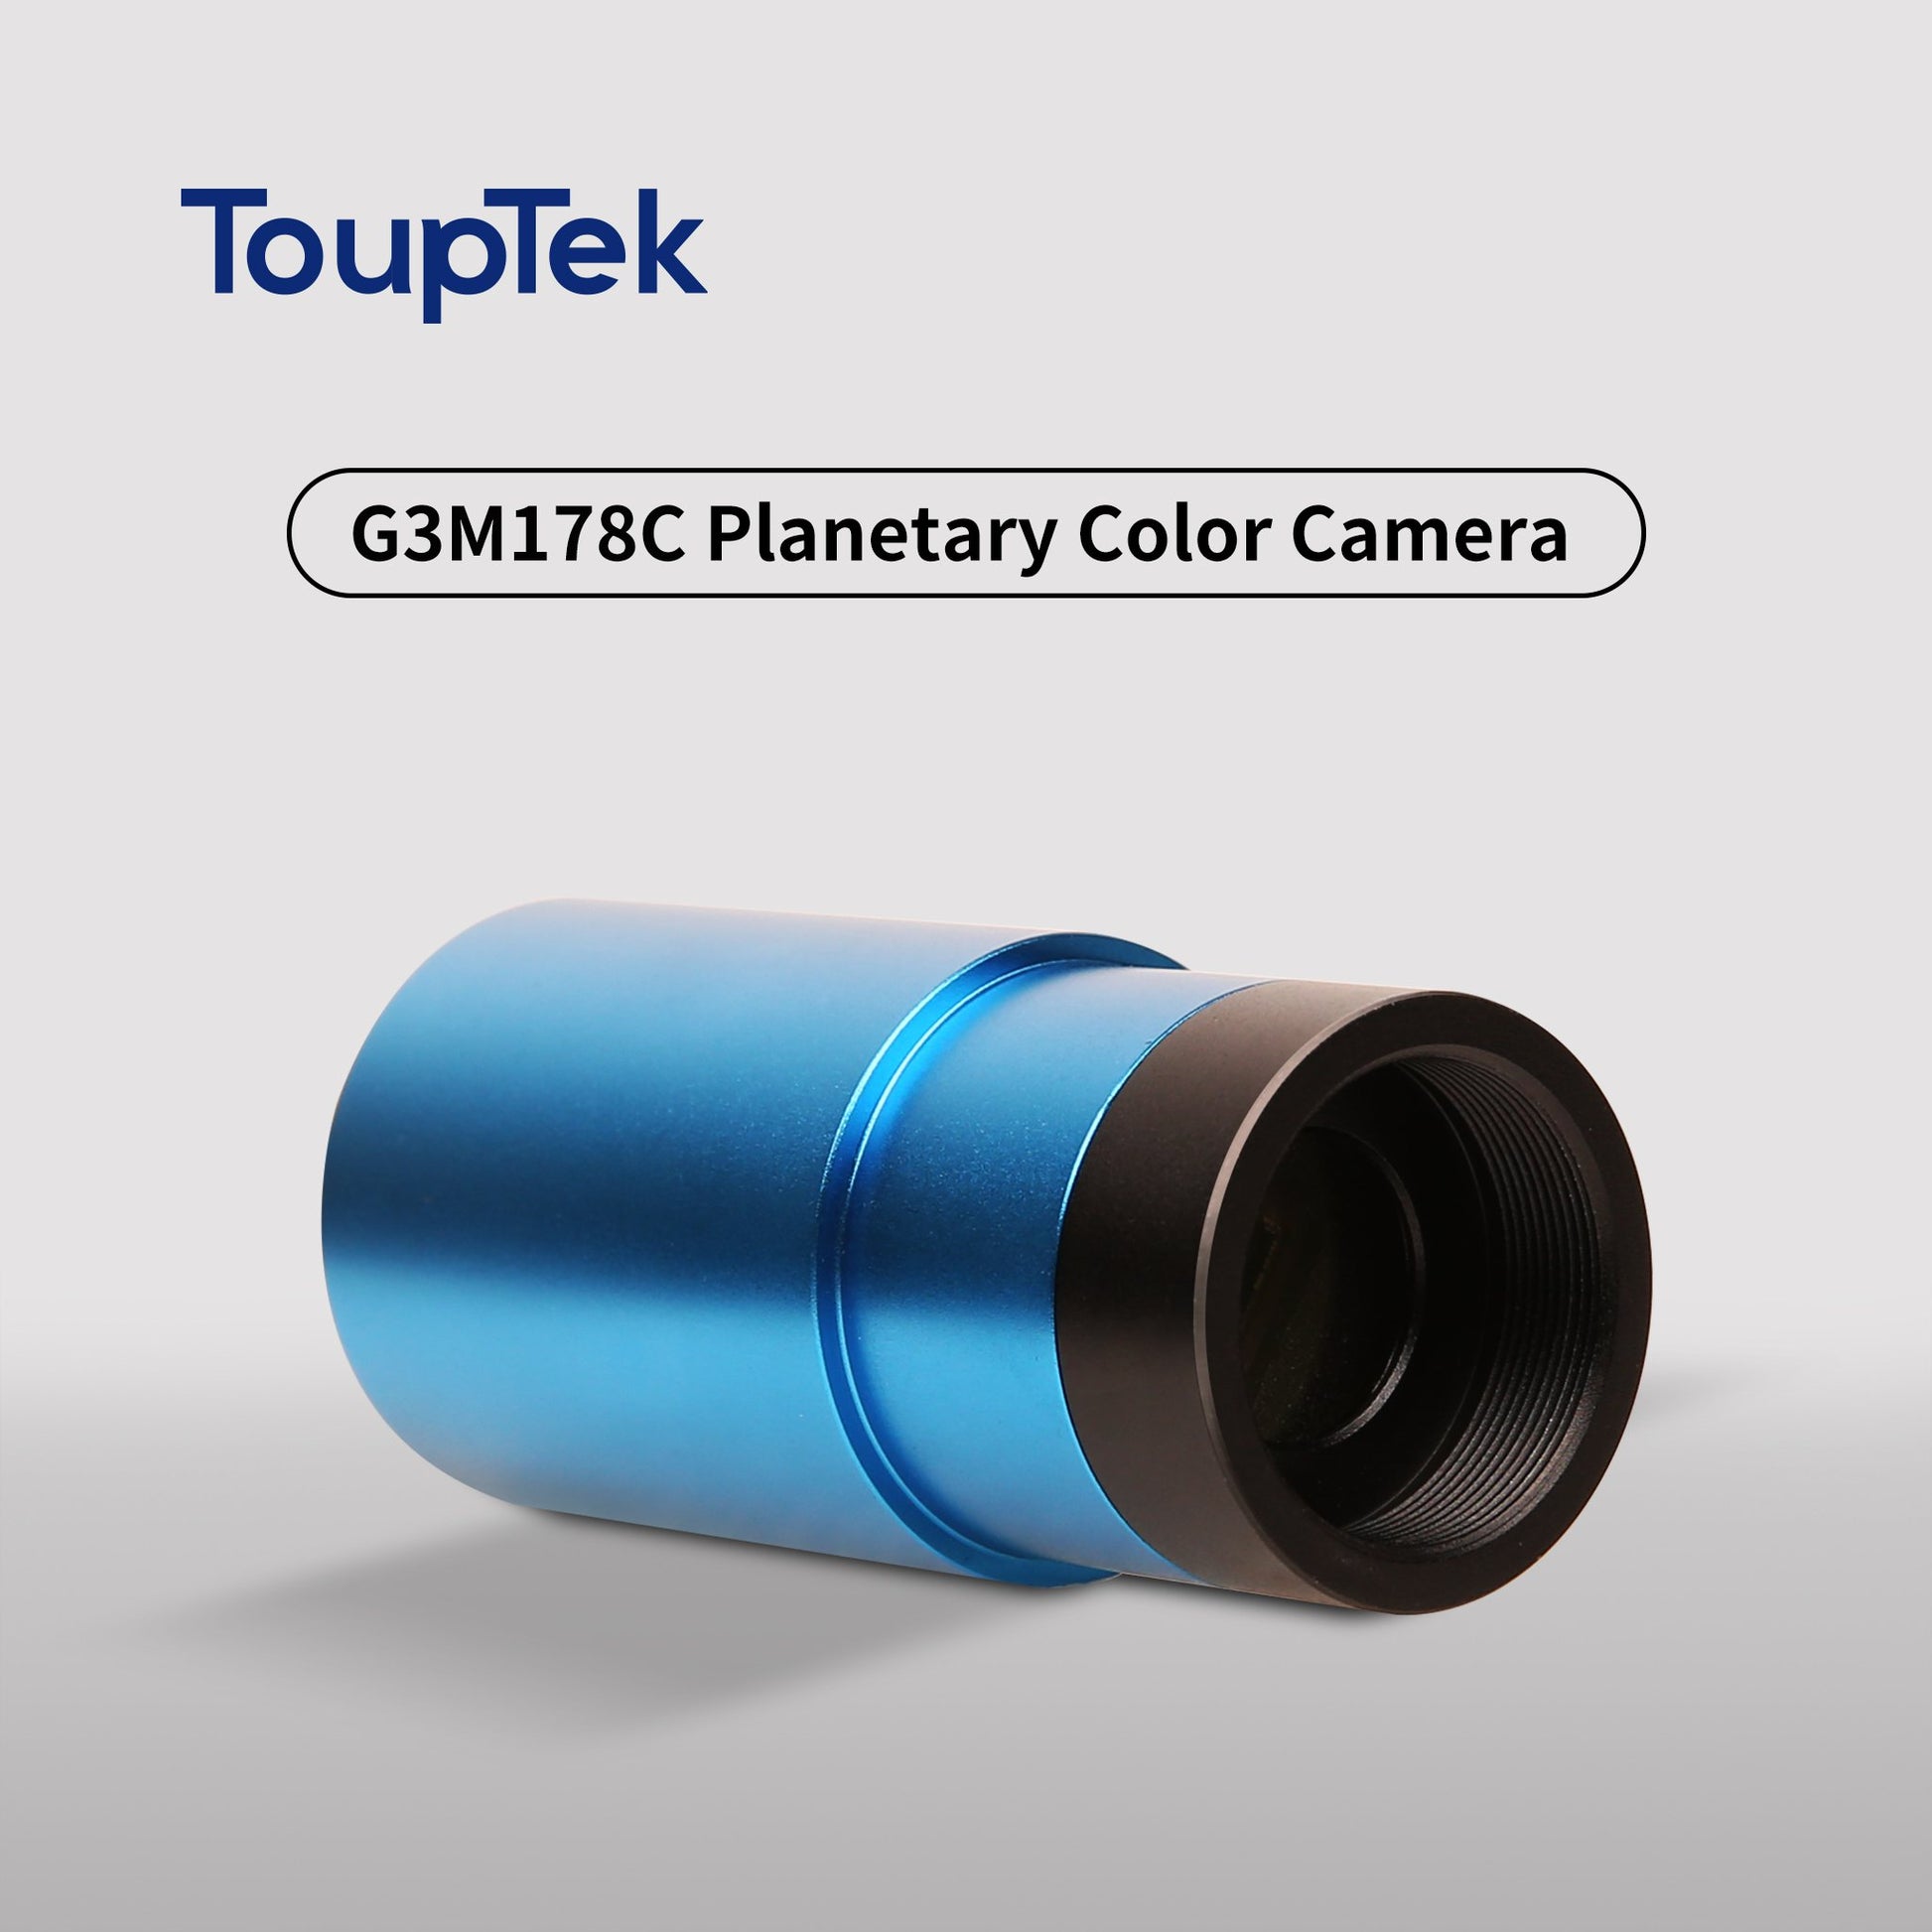 G3M178C Planetary Color Camera